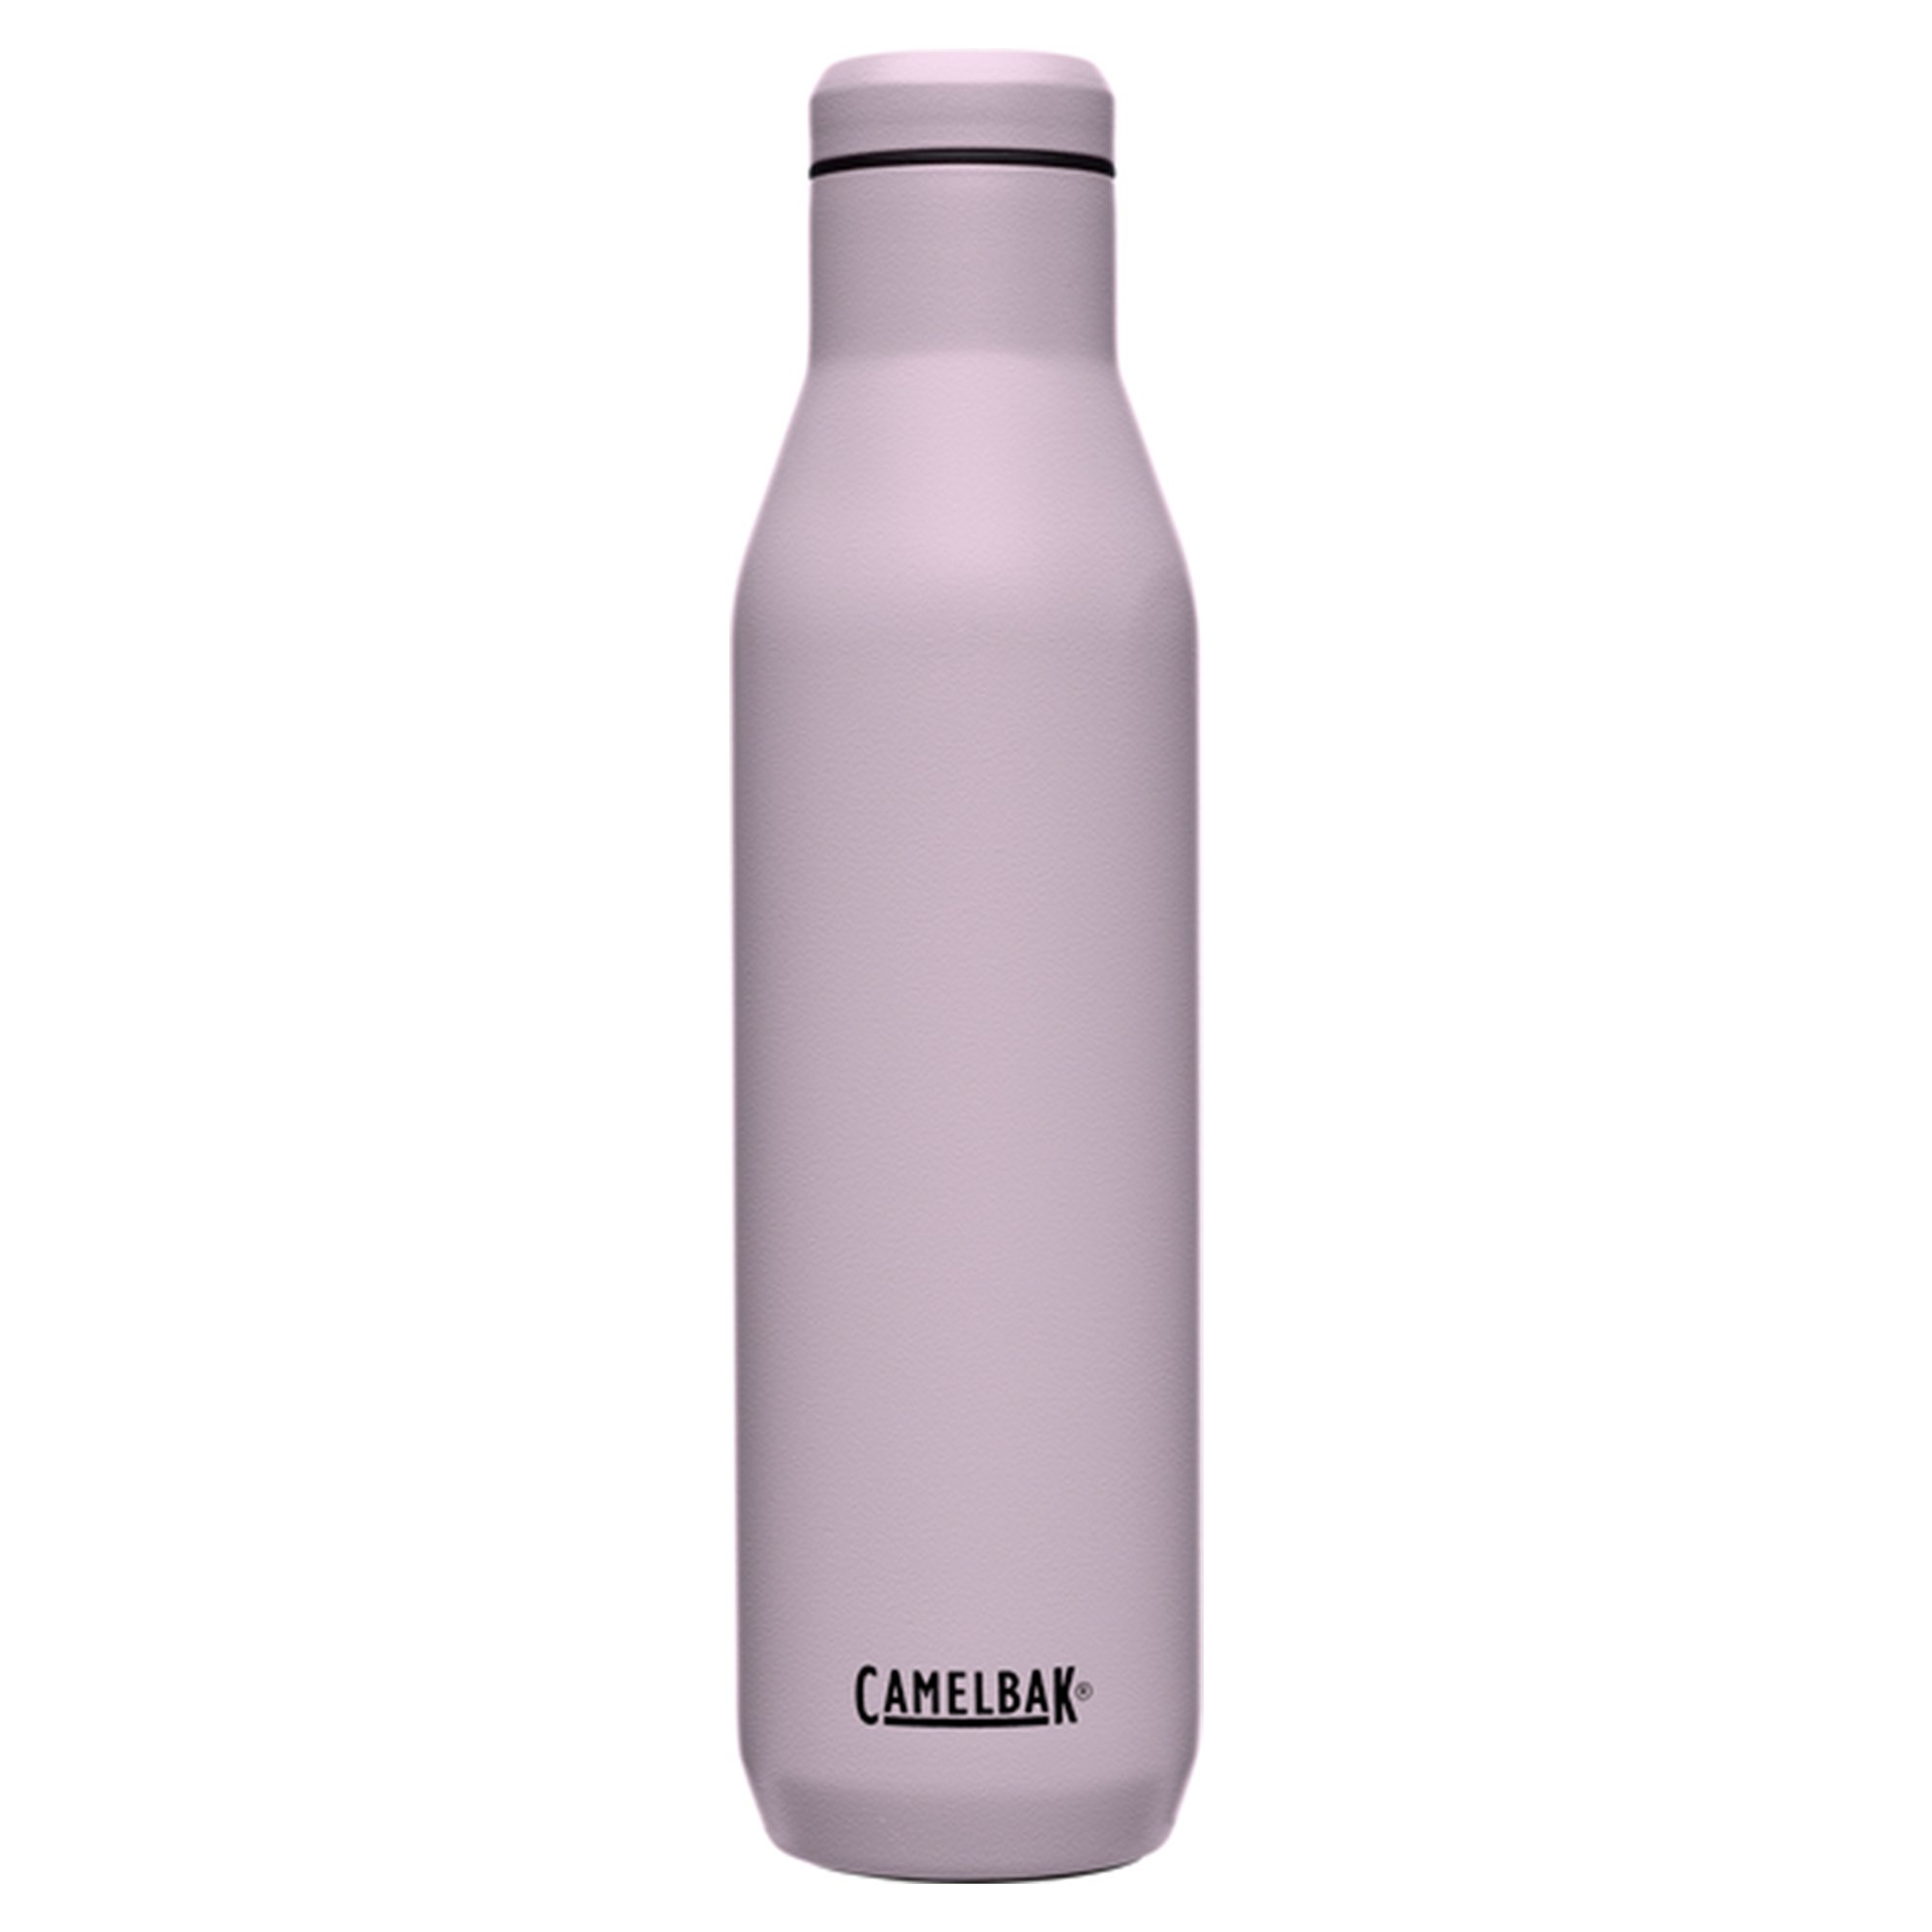 Camelbak Drikkeflaske 0.75 liter purple sky